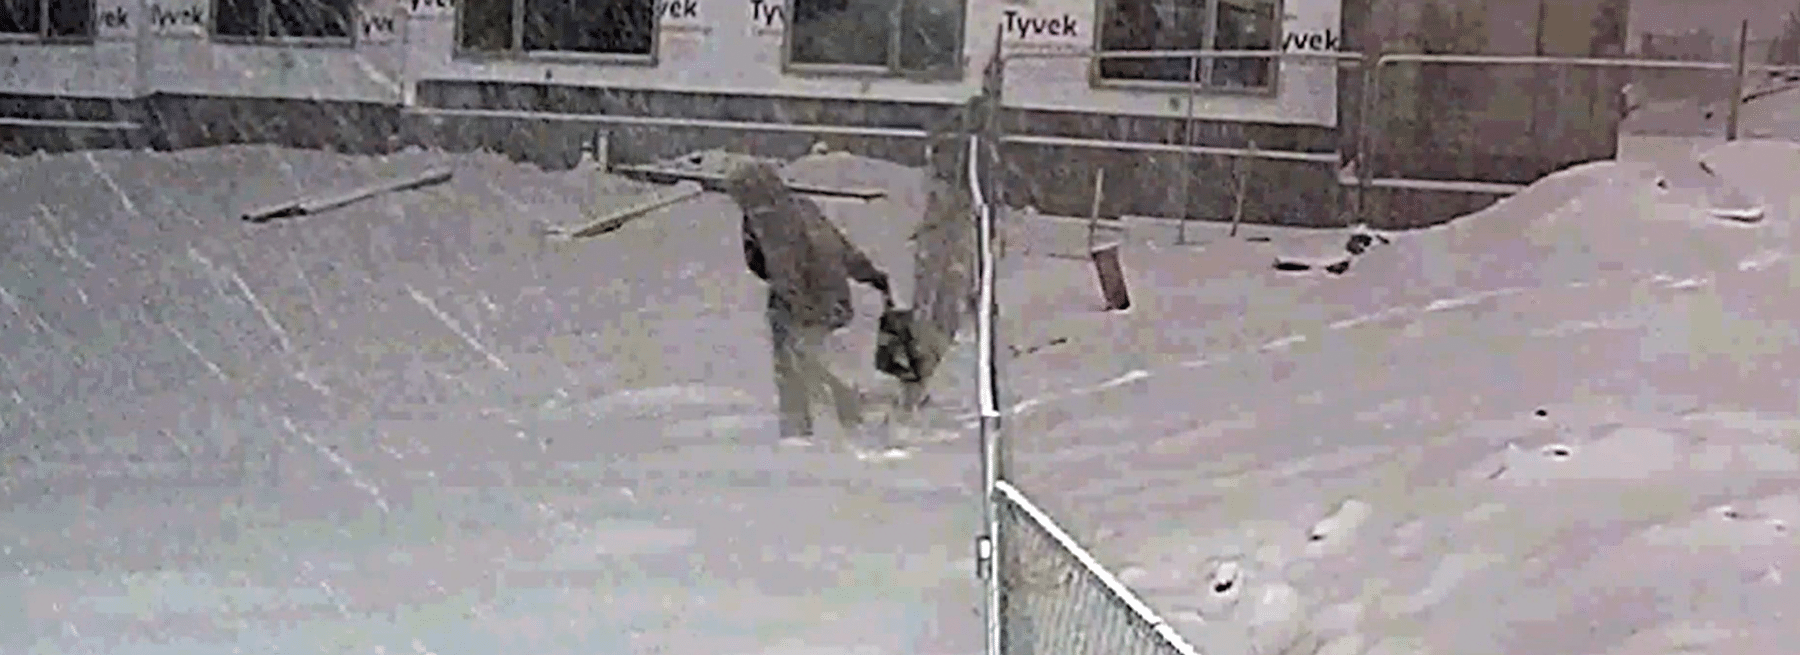 Trespasser on snowy construction site